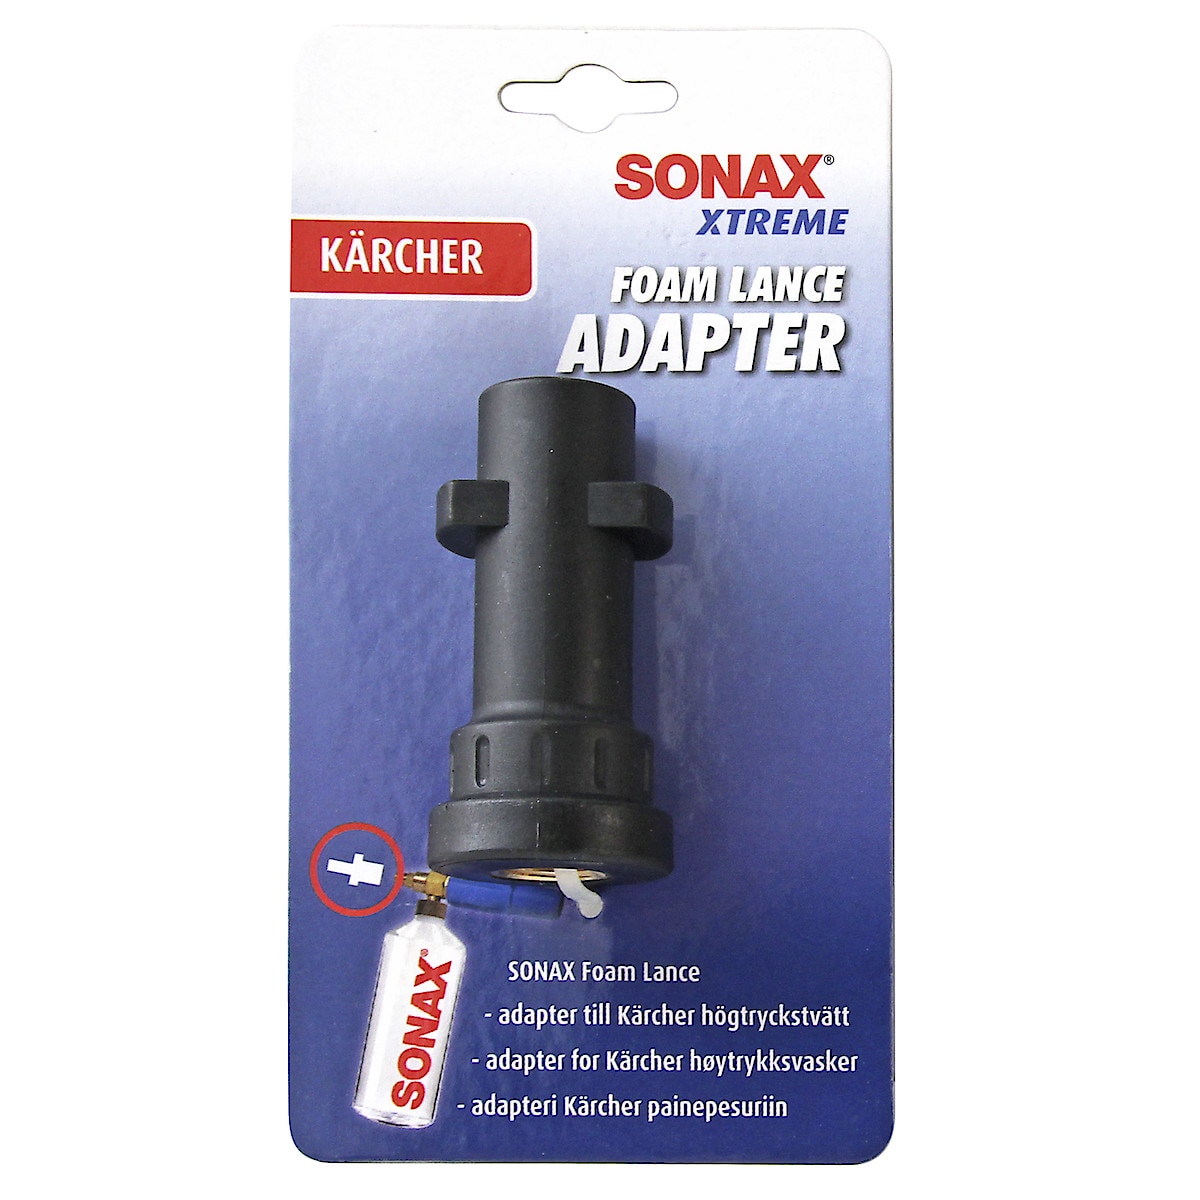 Sonax Foam Lance Adapter til Kärcher høytrykksspyler